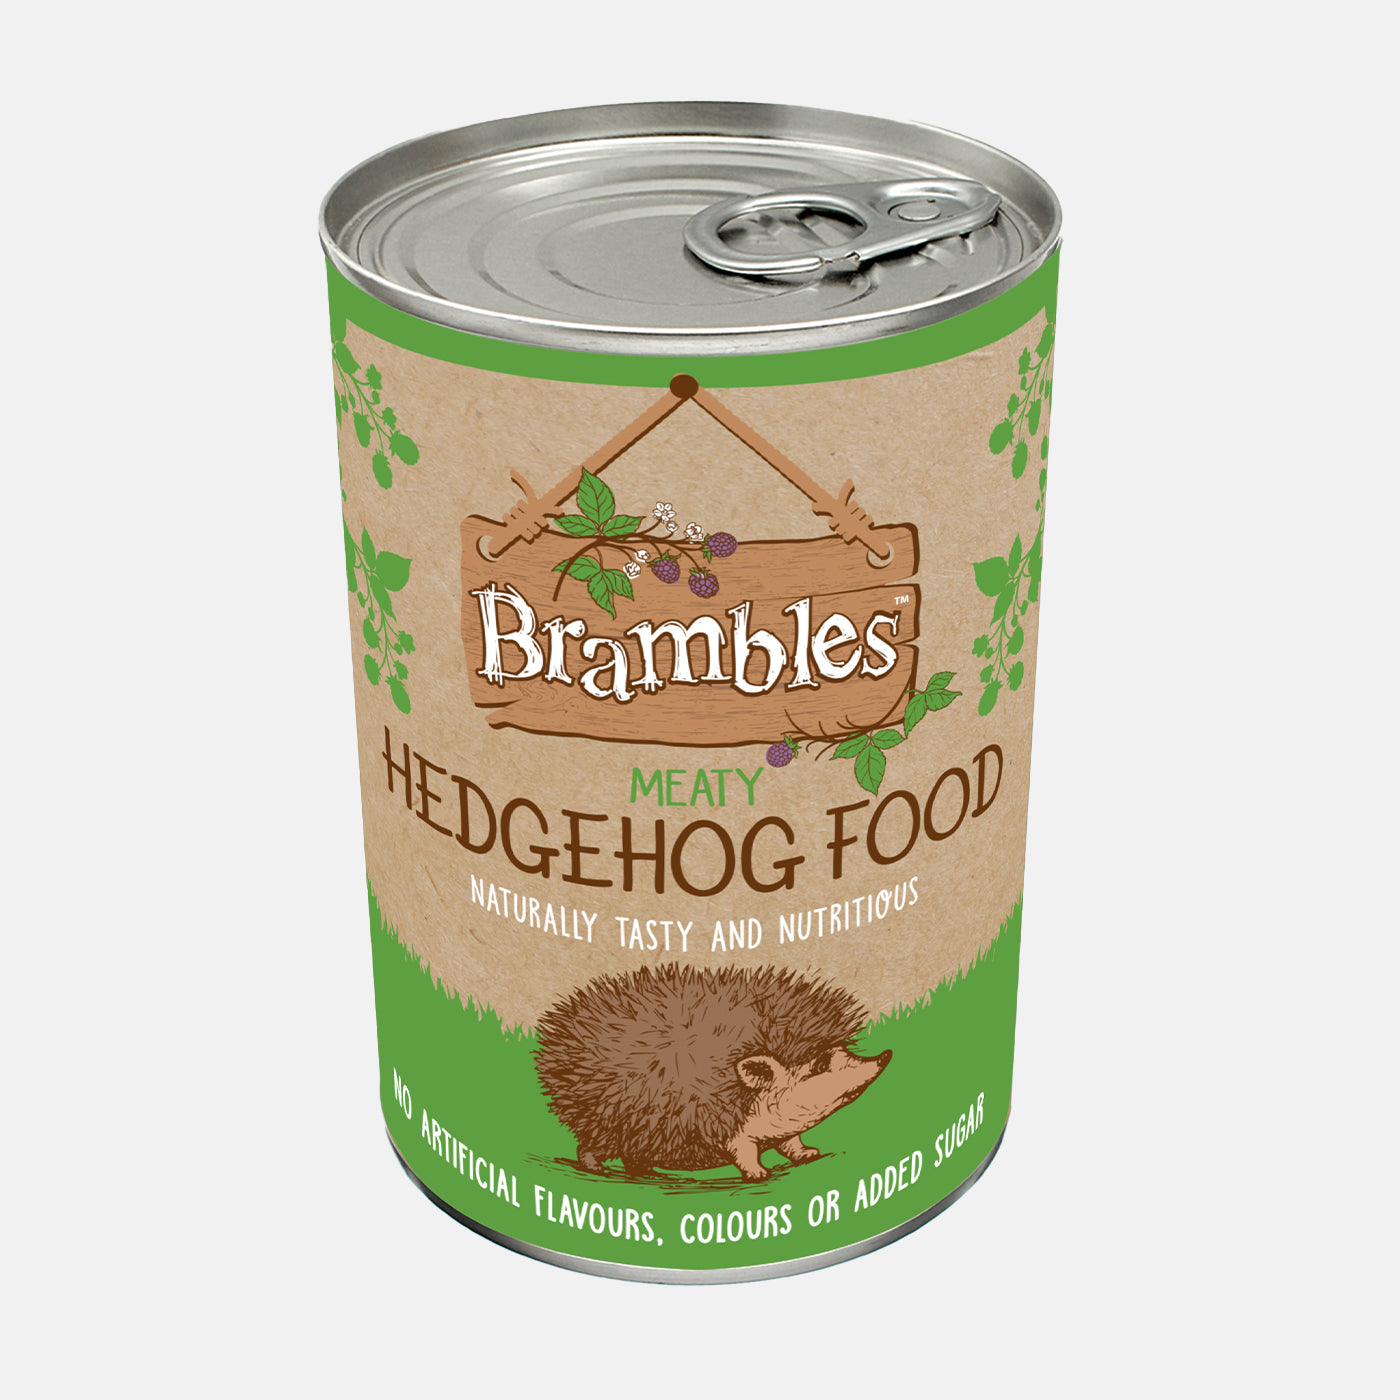 Brambles Meaty Hedgehog Food 400g